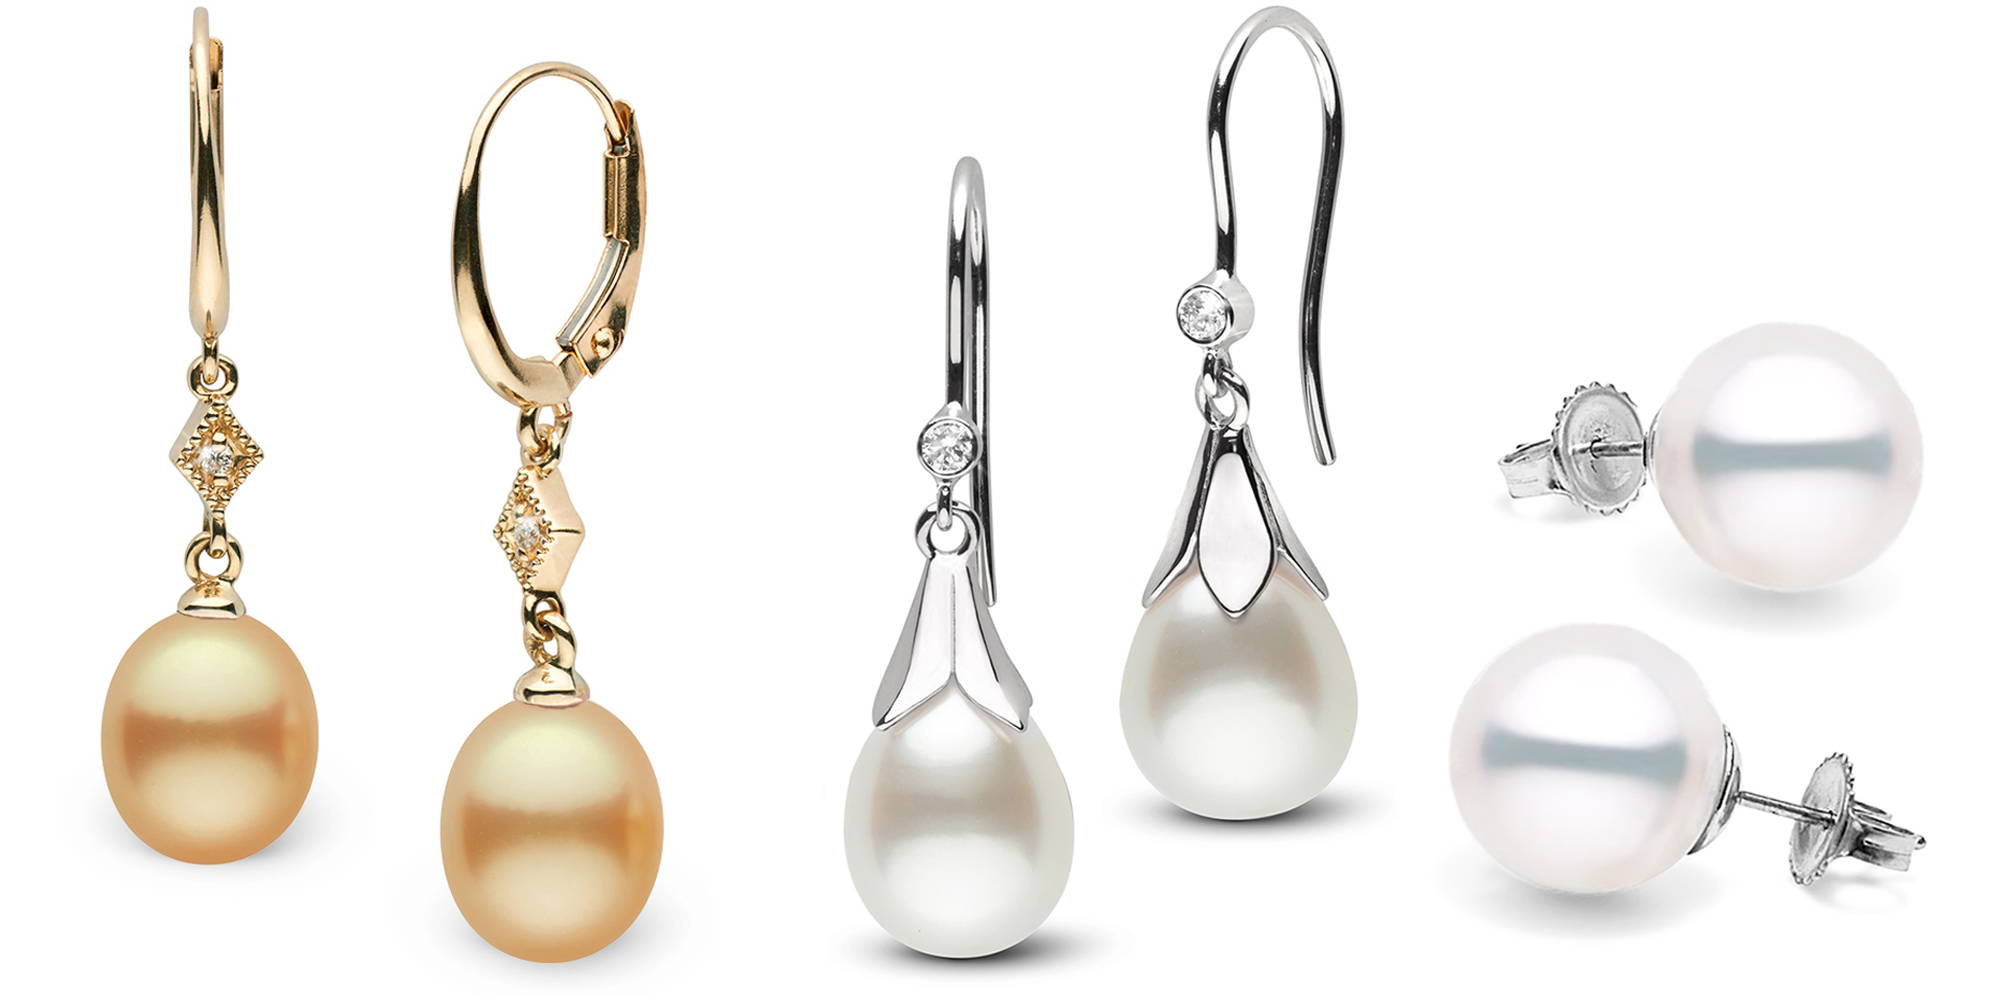 South Sea Pearl Jewelry Designs: Pearl Earrings